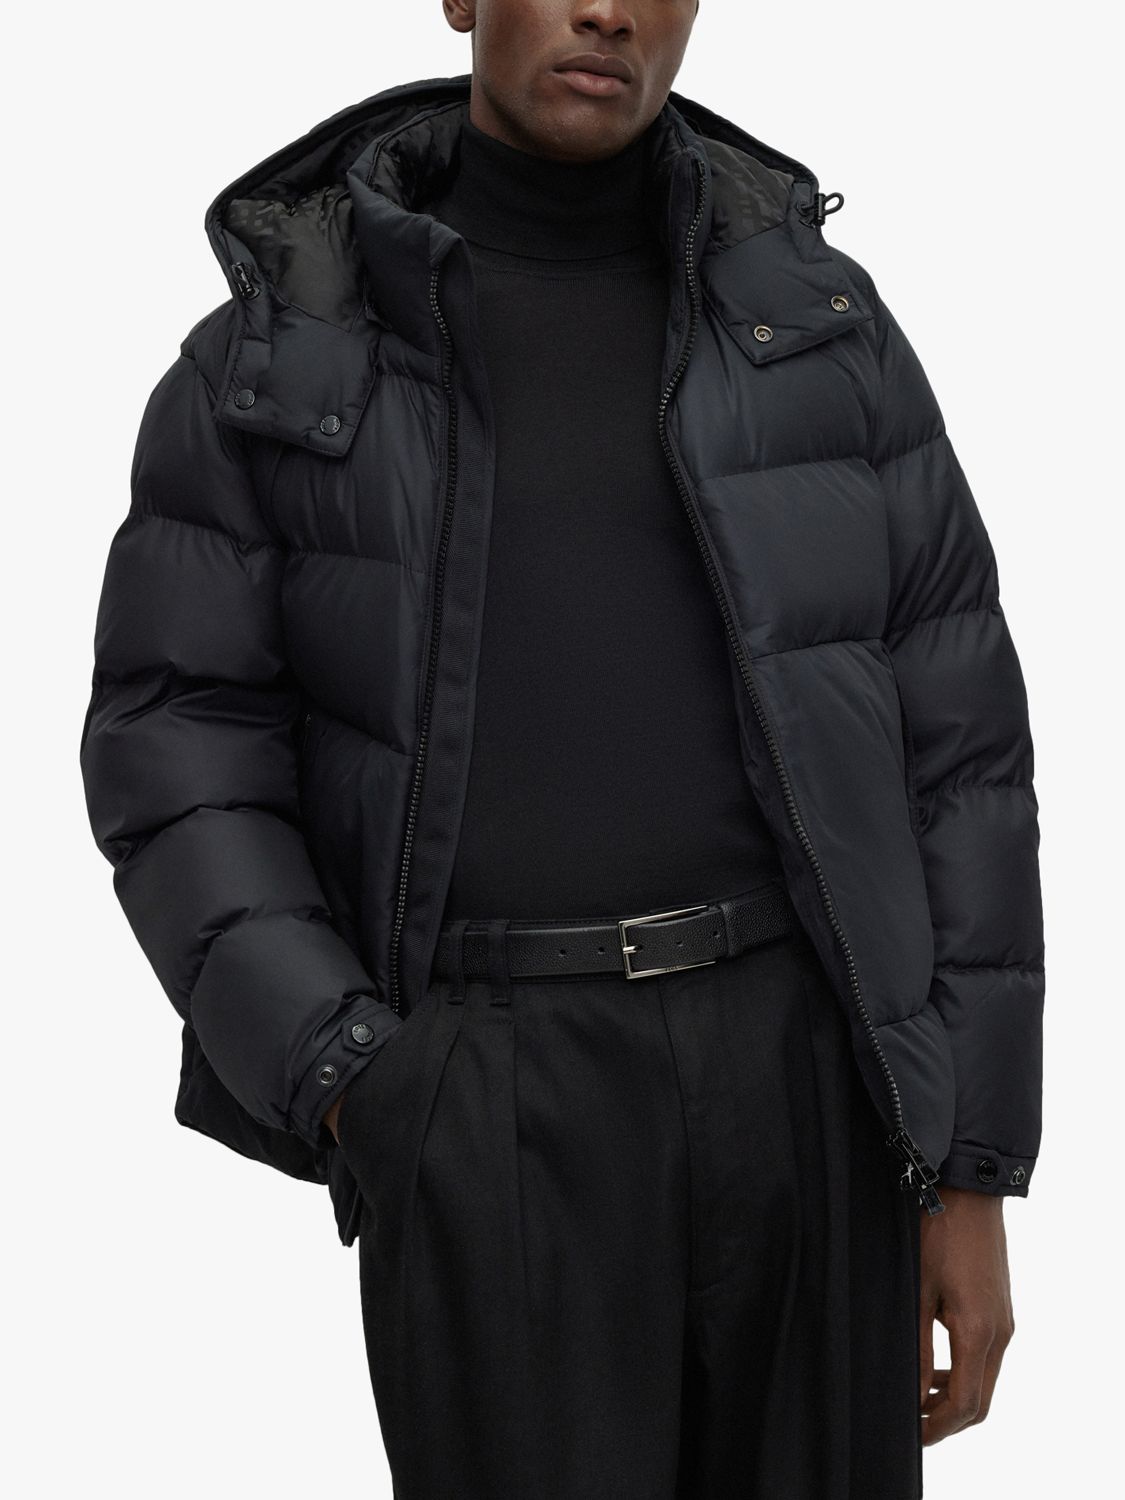 BOSS Corbinian Hooded Puffer Jacket, Black at John Lewis & Partners